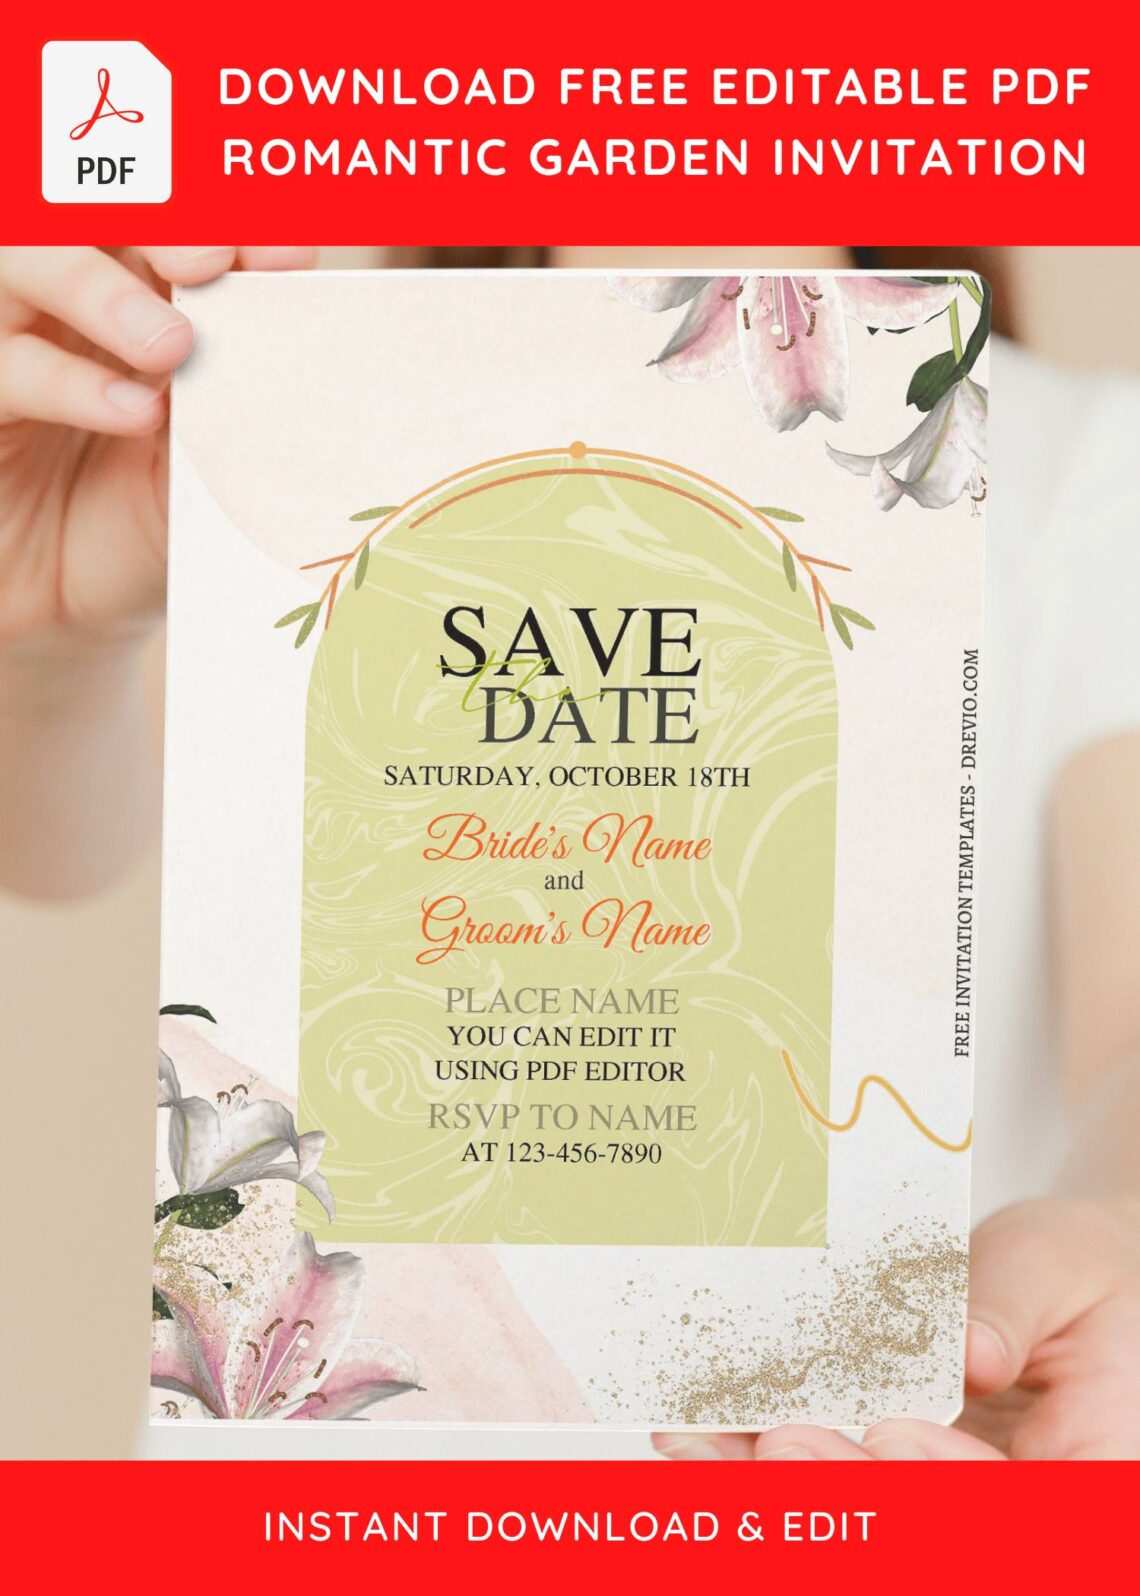 (Free Editable PDF) Romantic Sweet Garden Wedding Invitation Templates with enchanting white rosse